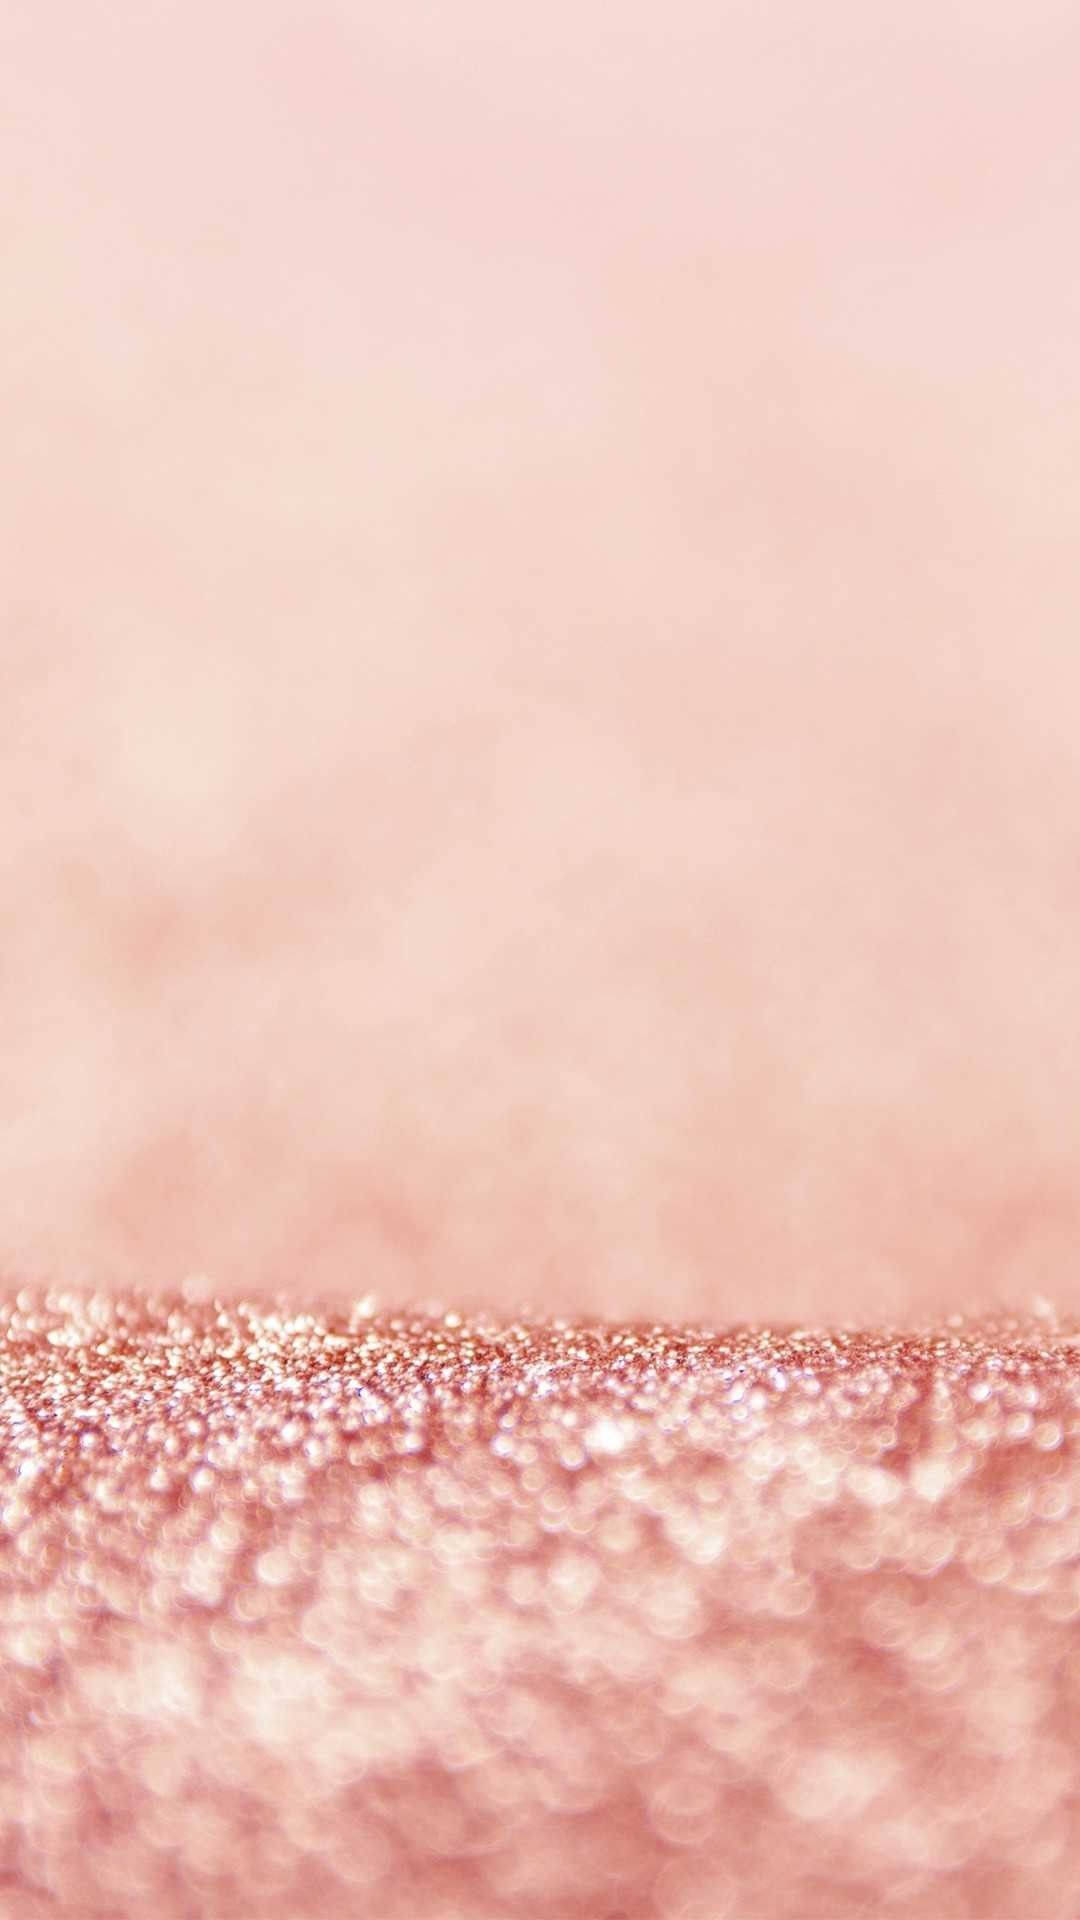 Caption: Trendy Pink Smartphone On A Light Pastel Background Wallpaper